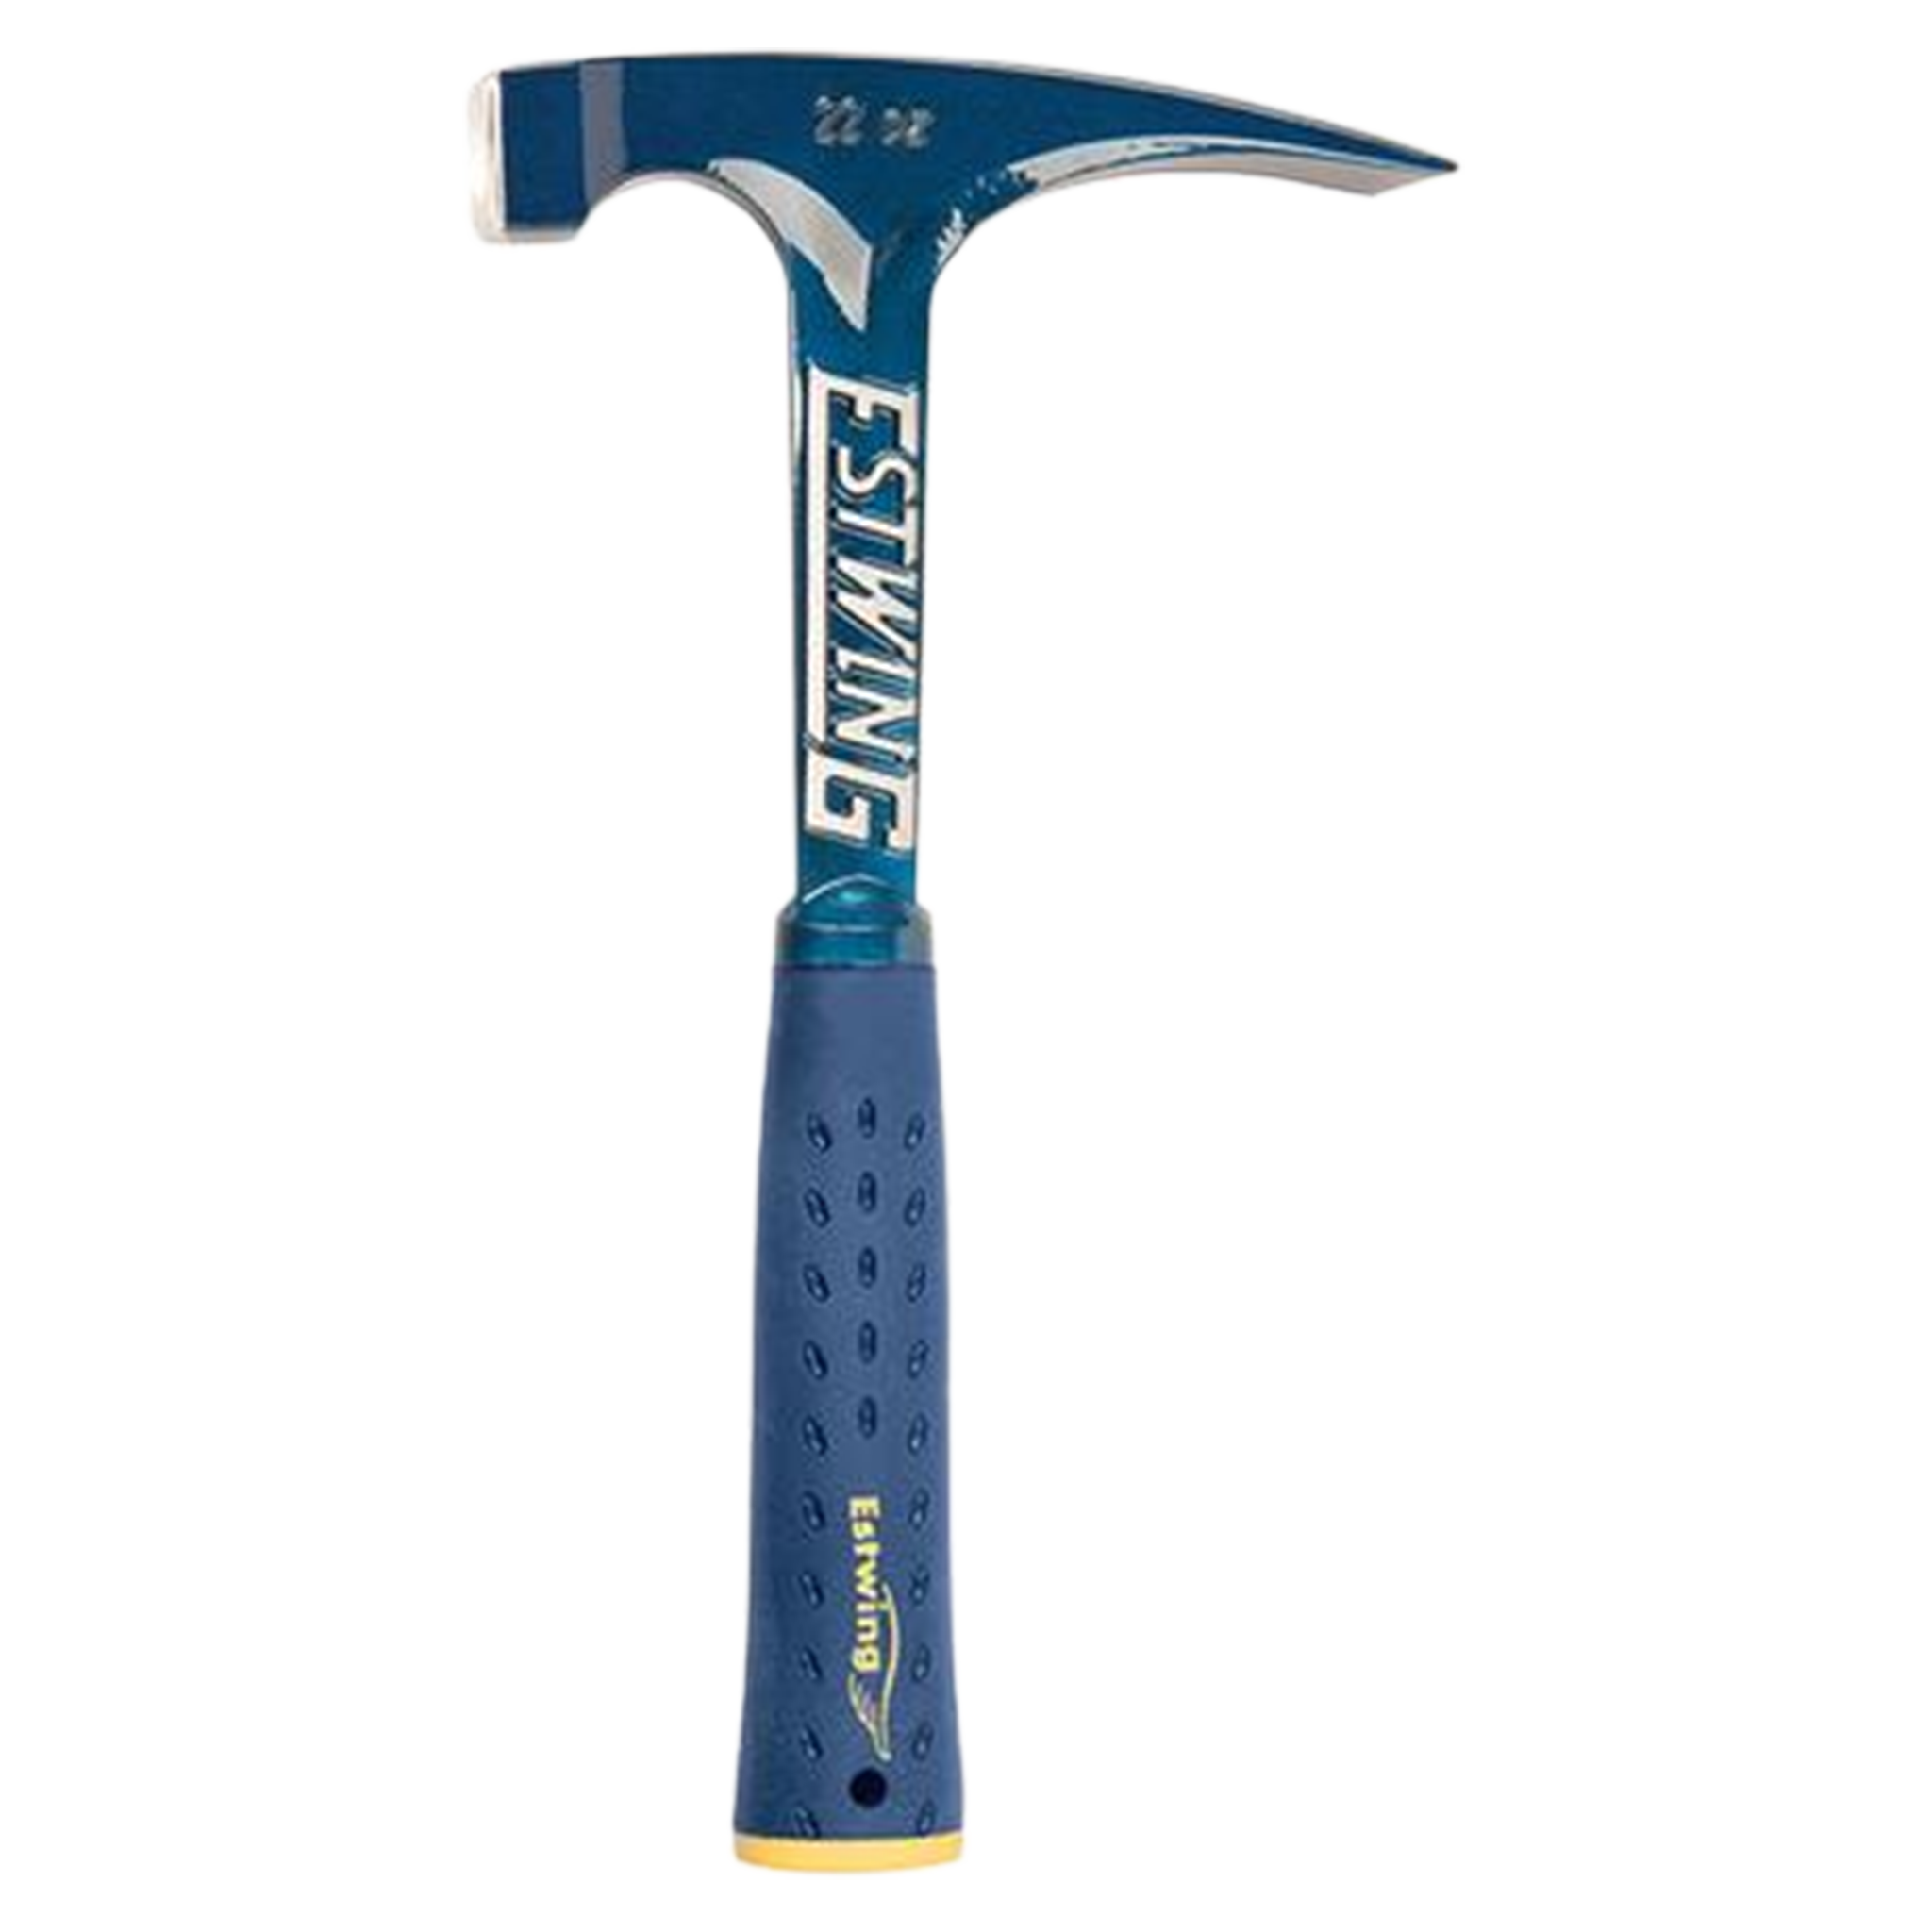 Estwing 22 oz Big Blue Rock Chisel Hammer